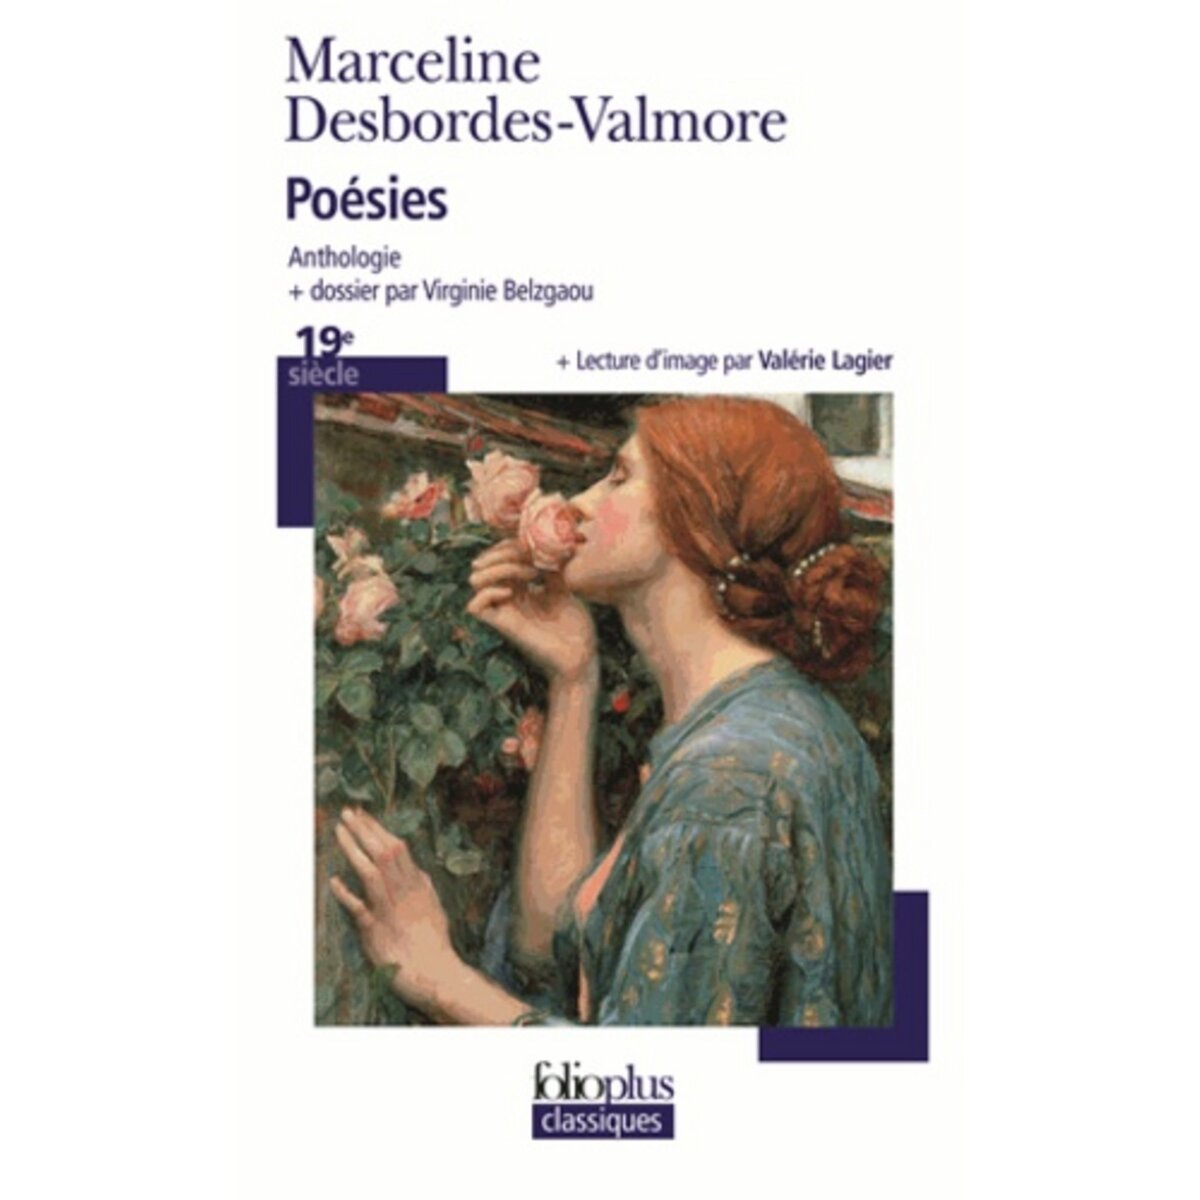  POESIES, Desbordes-Valmore Marceline